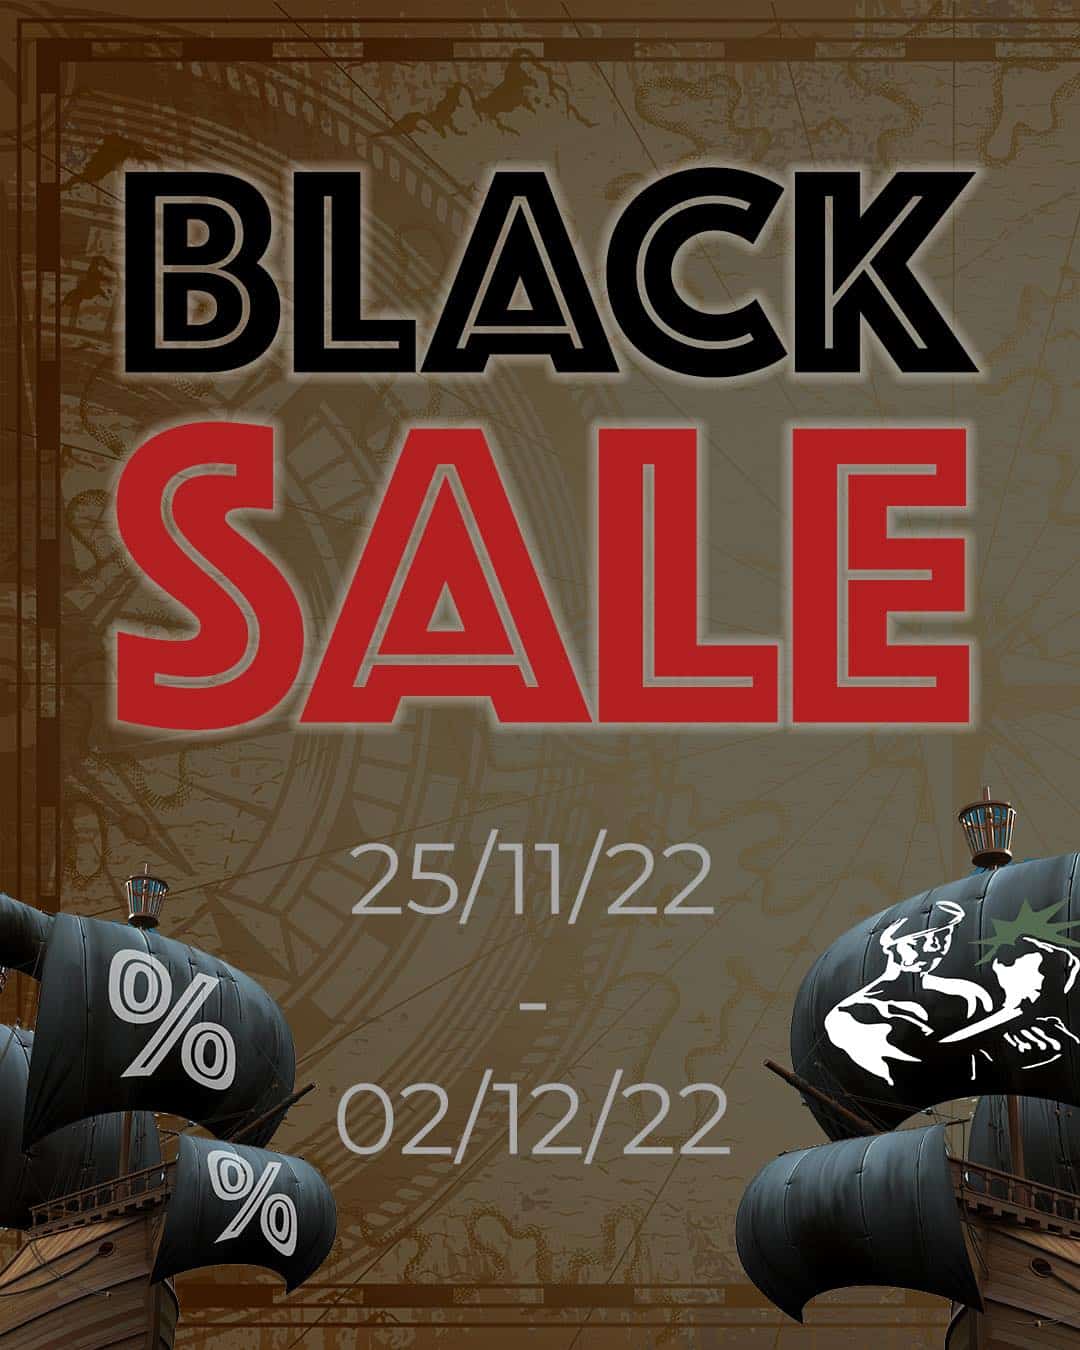 Discounts, discounts: “Black Sale til midnight!”